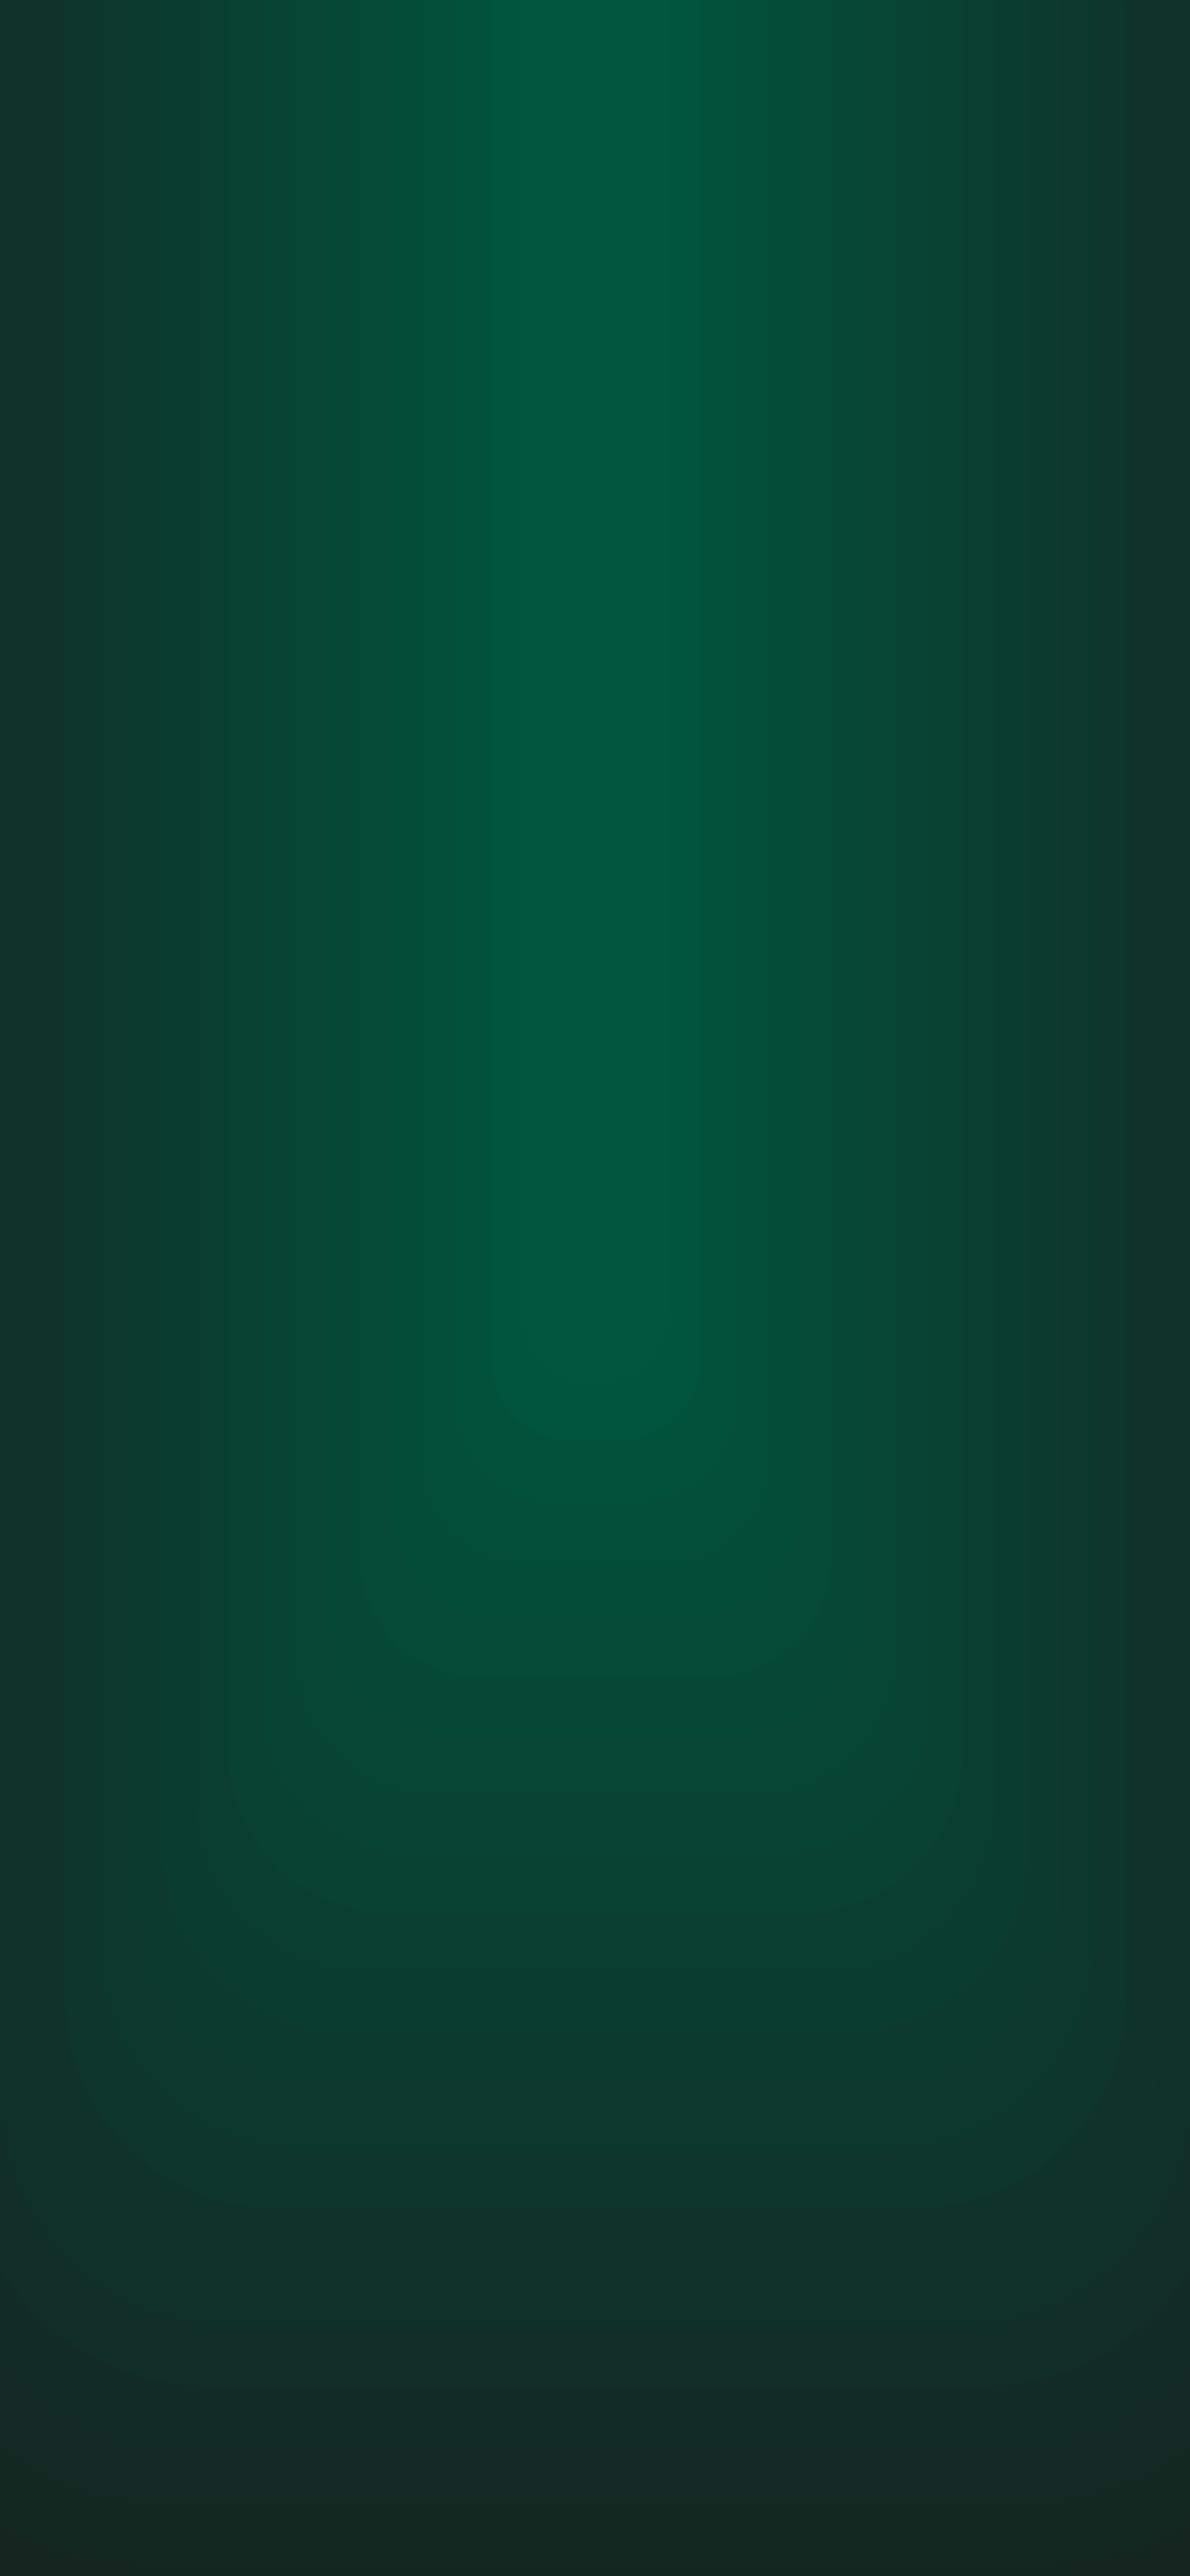 iPhone 4k Green Wallpapers - Wallpaper Cave